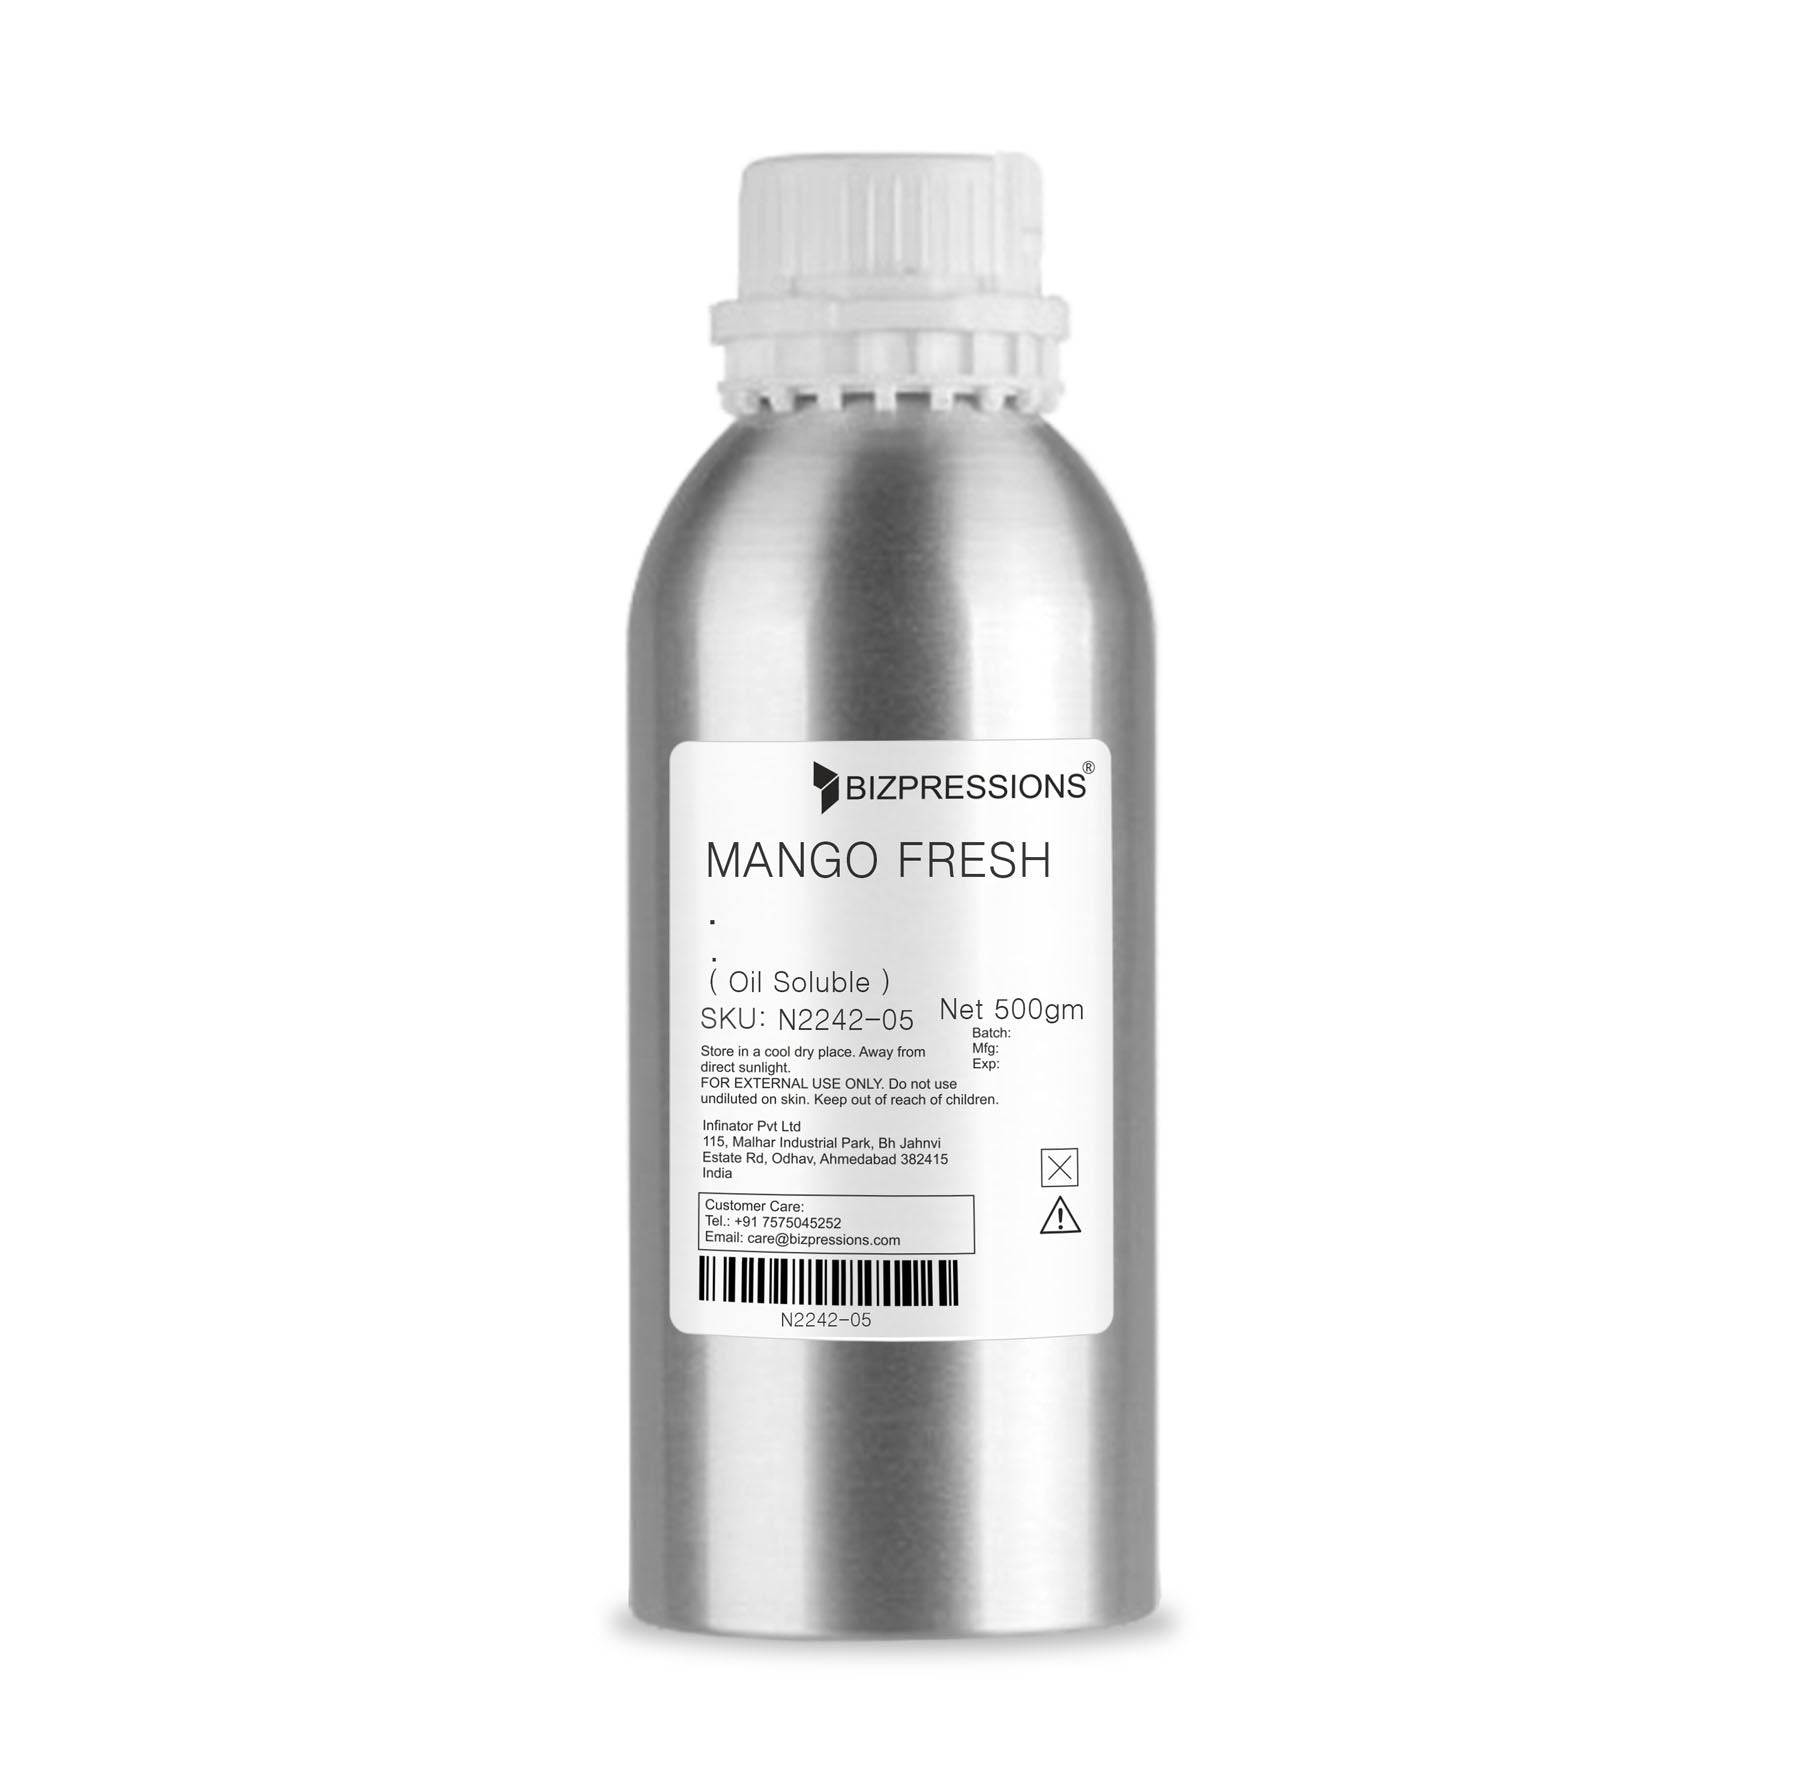 MANGO FRESH - Fragrance ( Oil Soluble ) - 500 gm